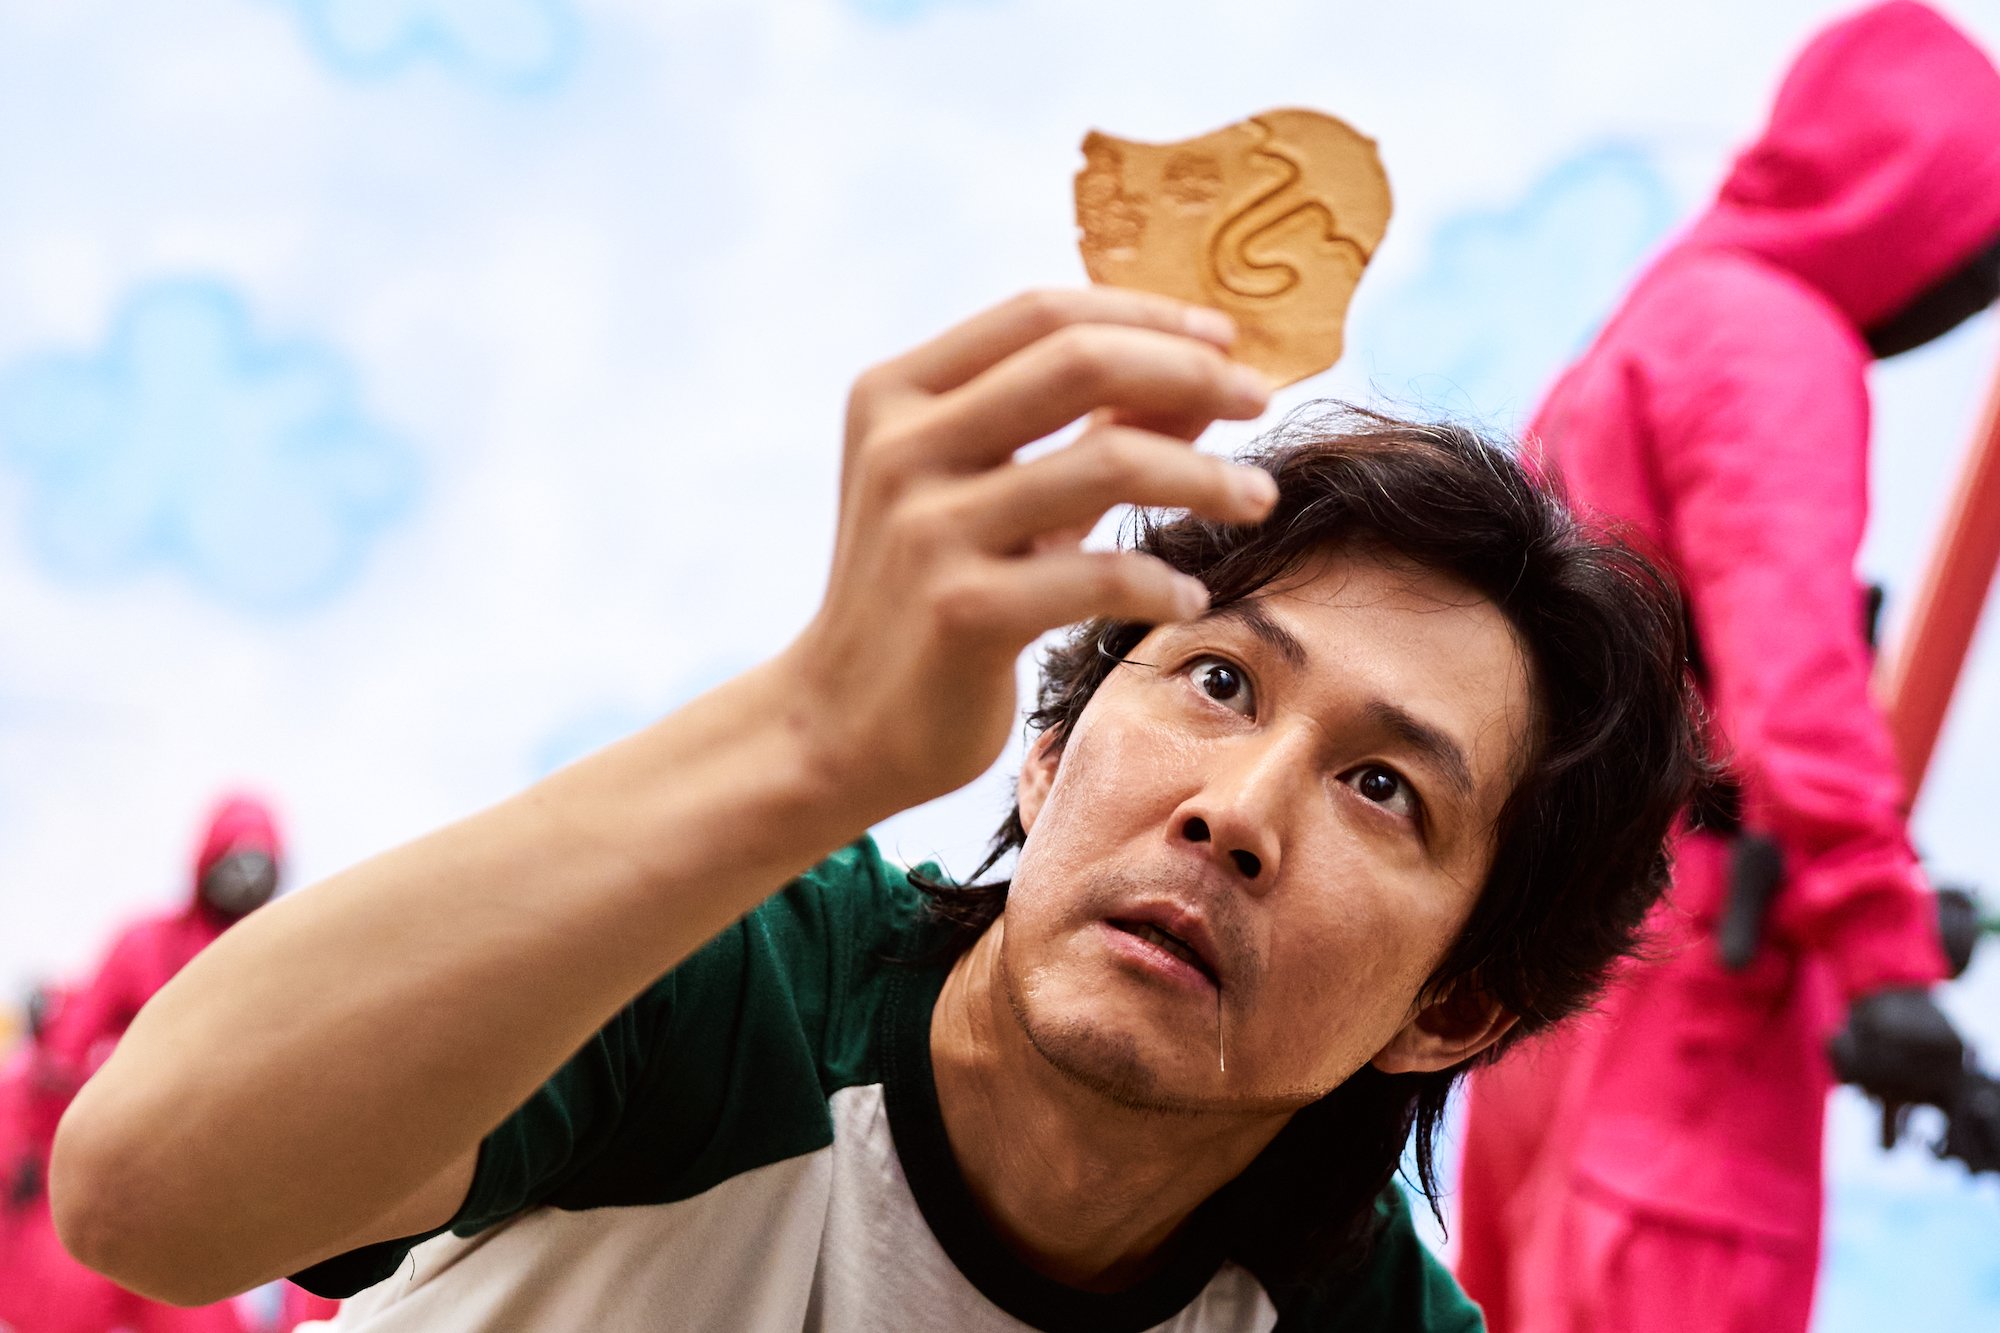 Actor Lee Jung-jae holding a cookie in 'Squid Game' Season 1.